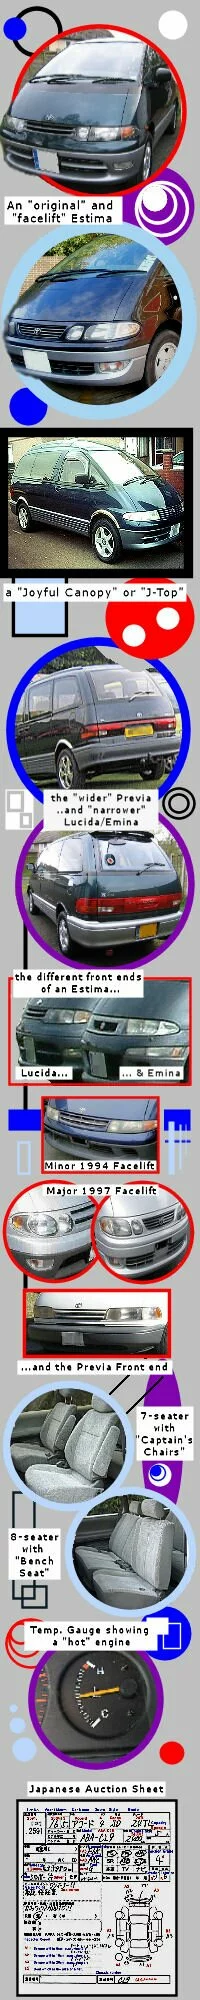 Estima Motoring Community - the many faces and models of an Estima, Emina, Lucida & Previa!